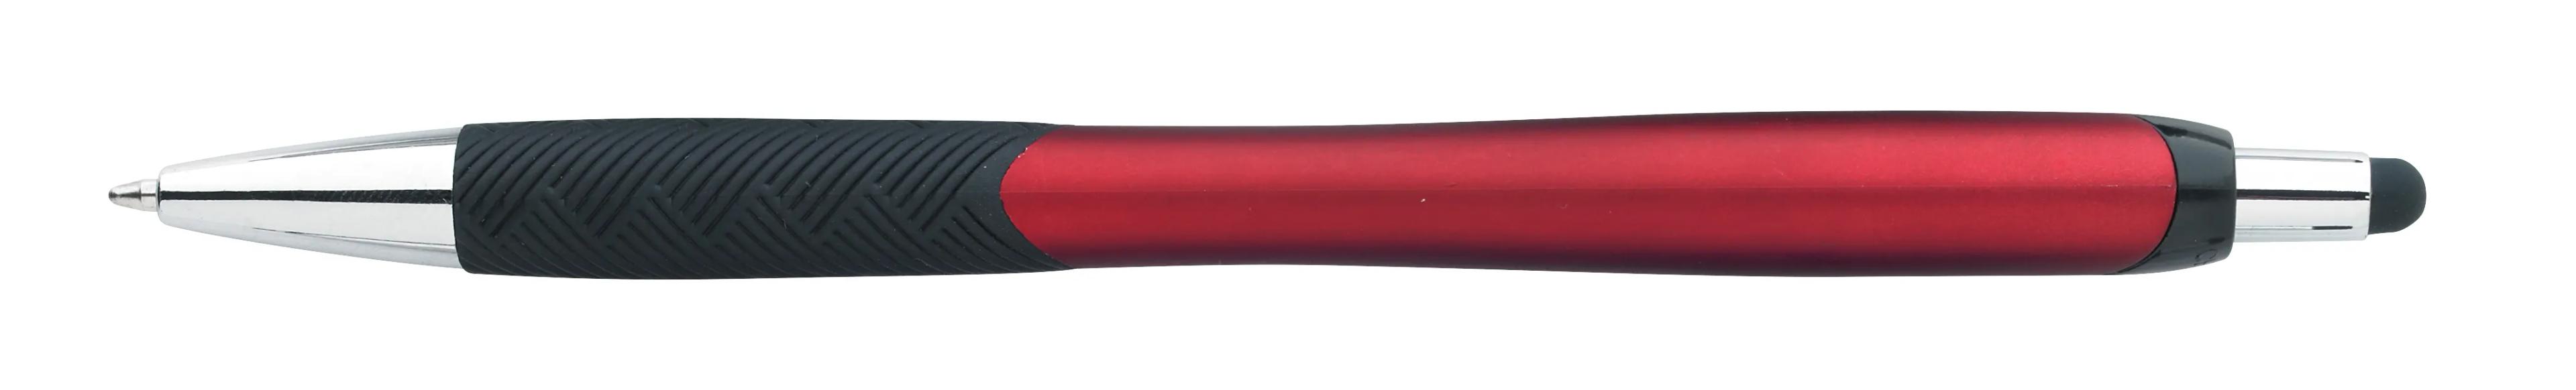 Metallic Pattern Grip Stylus Pen 11 of 37